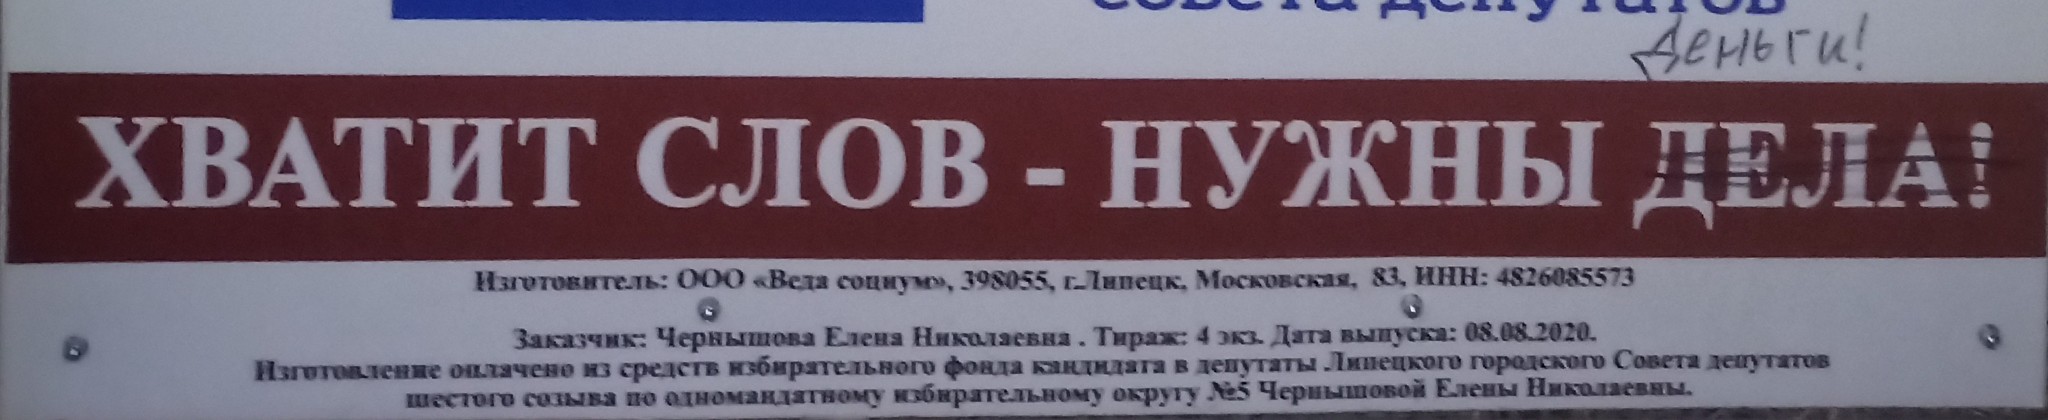 Someone tweaked the election poster - My, Elections, Humor, 2020, Deputies, Lipetsk